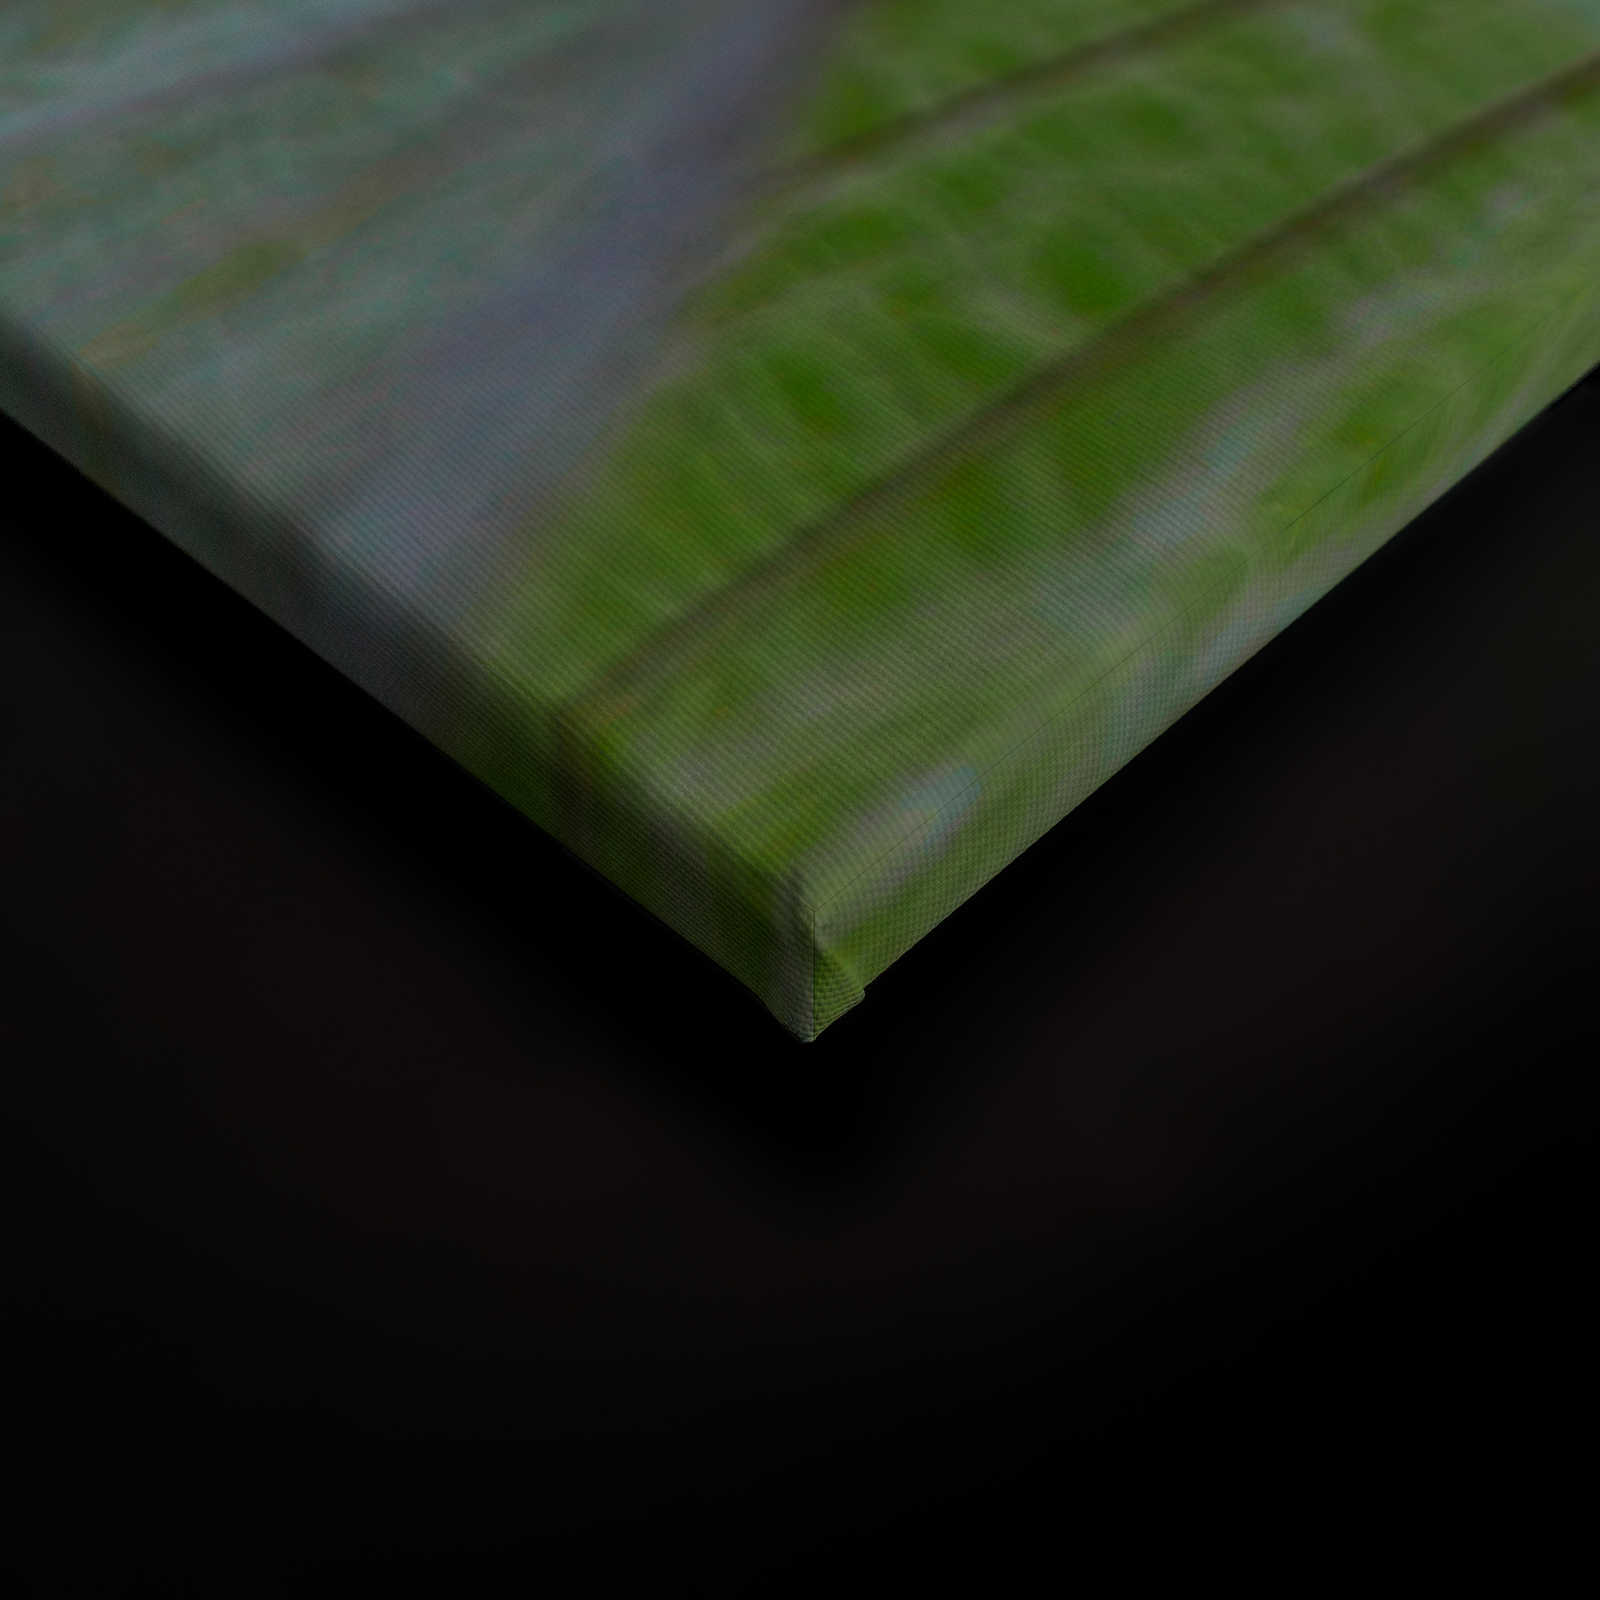             Leinwandbild Detailaufnahme mit Pusteblumen – 1,20 m x 0,80 m
        